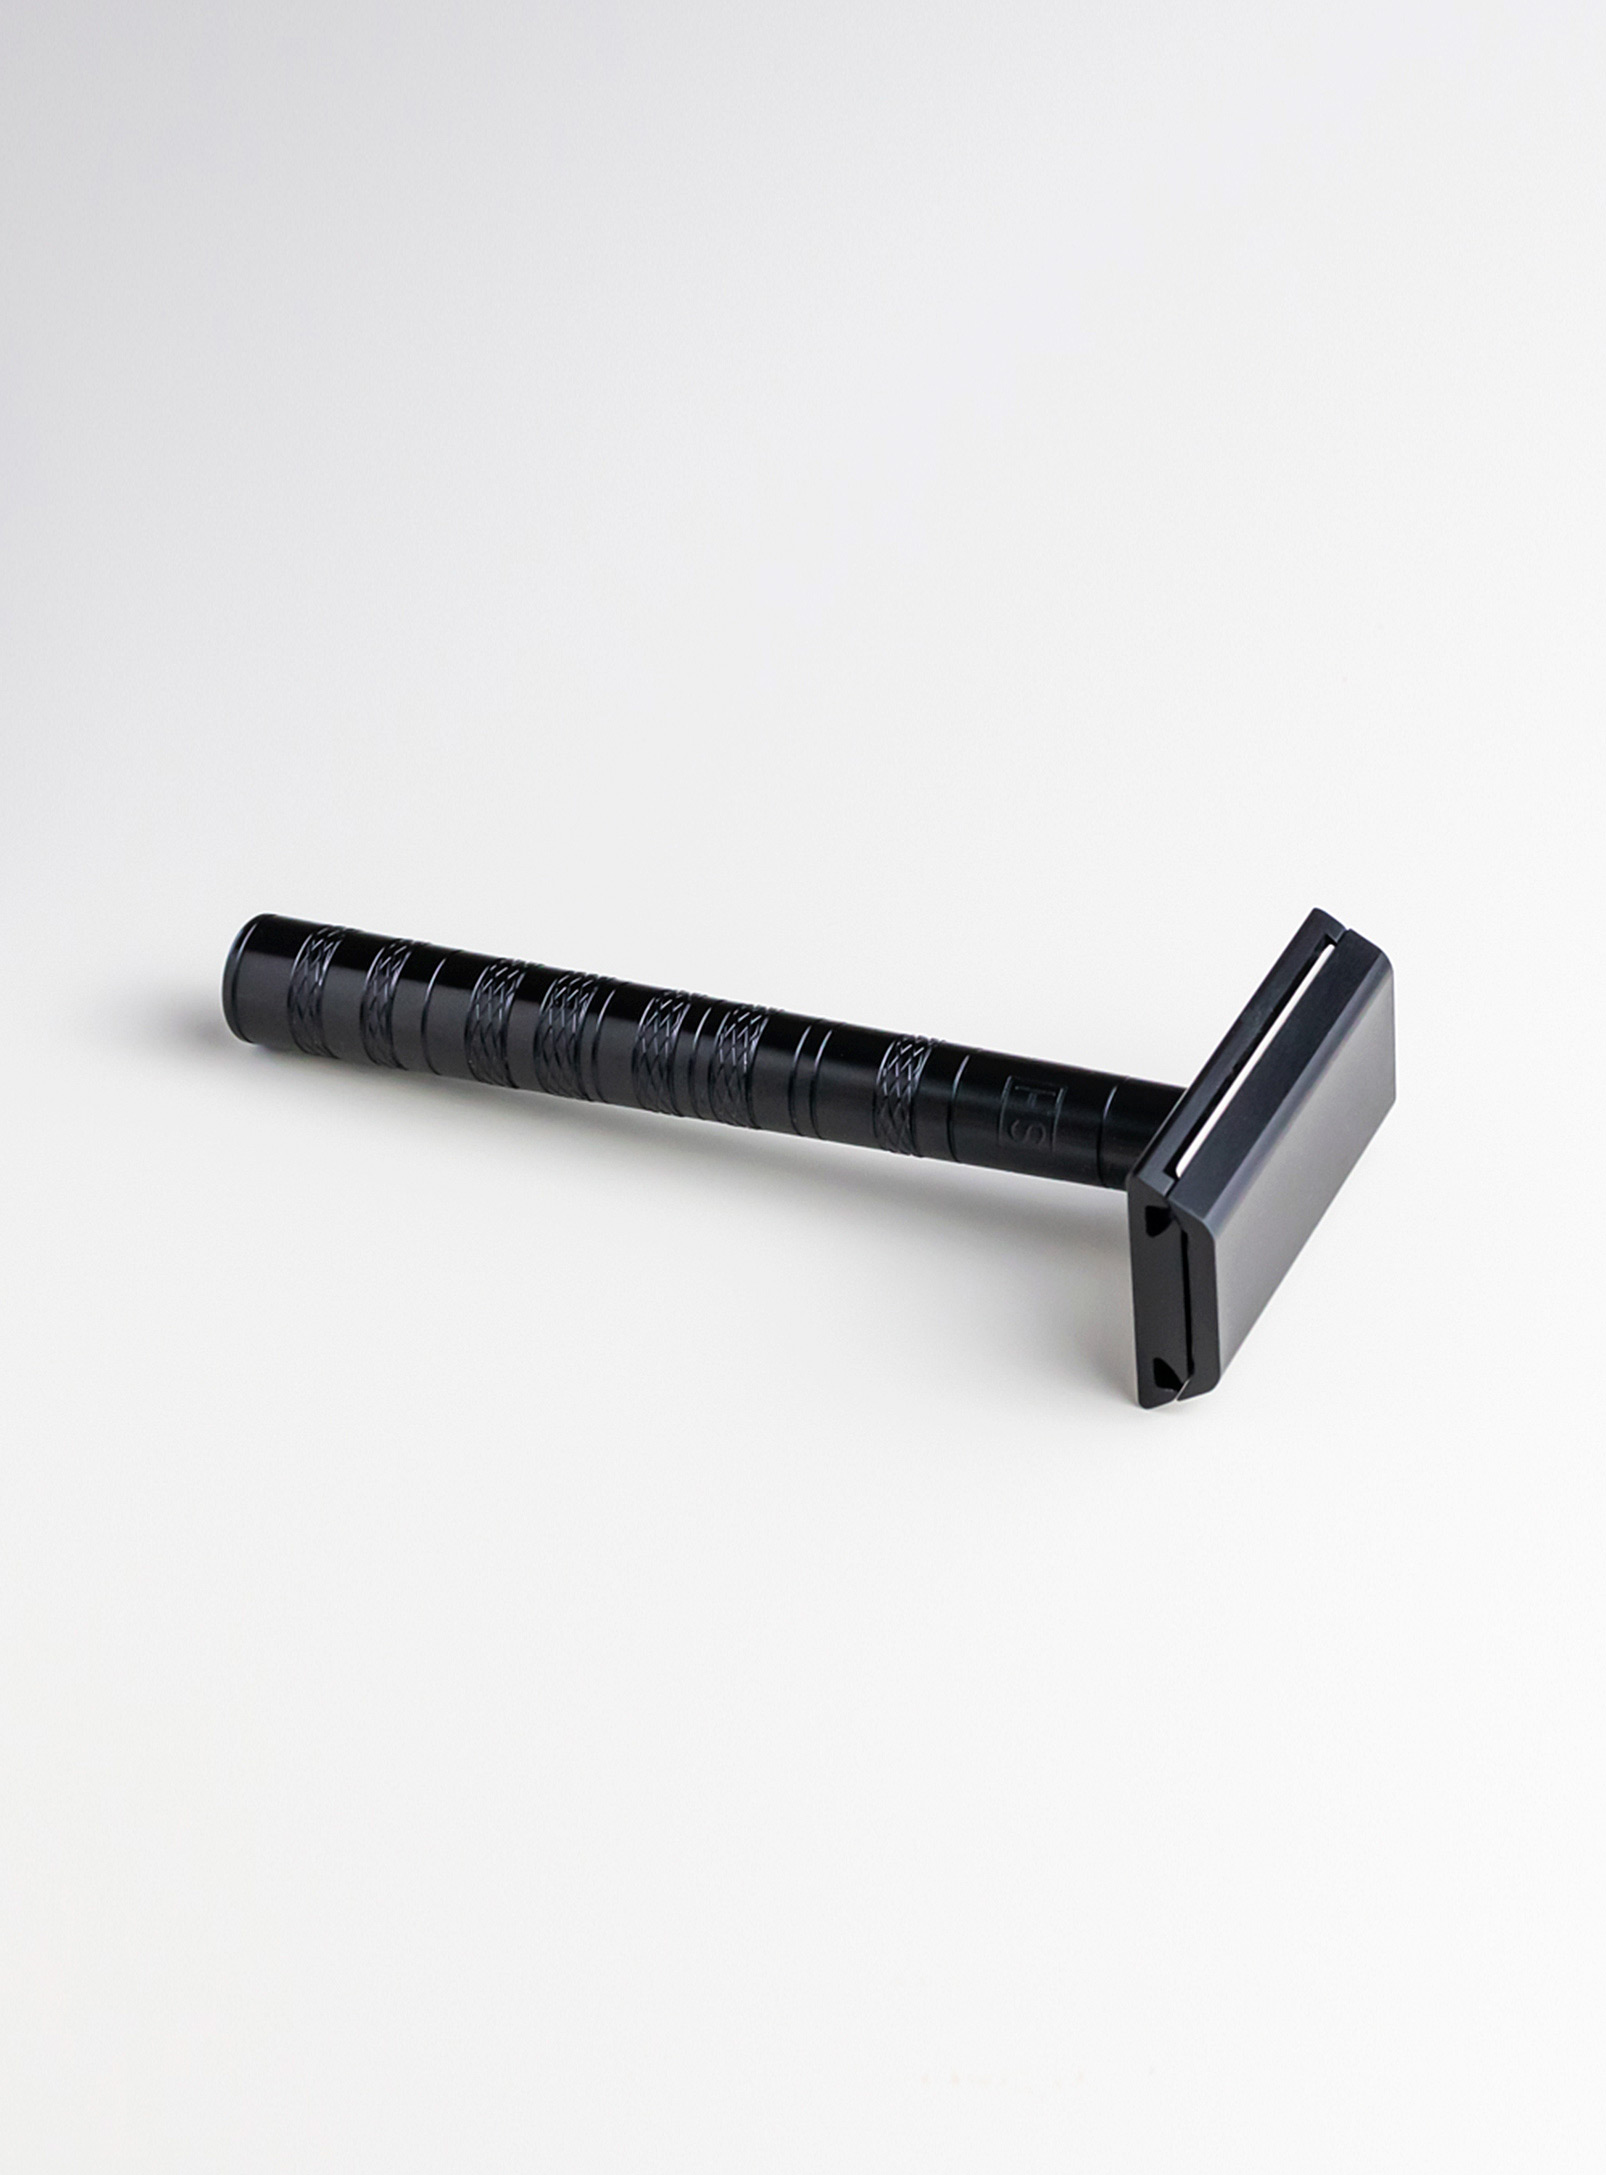 Henson Shaving Al13 Aluminum Safety Razor In Patterned Black